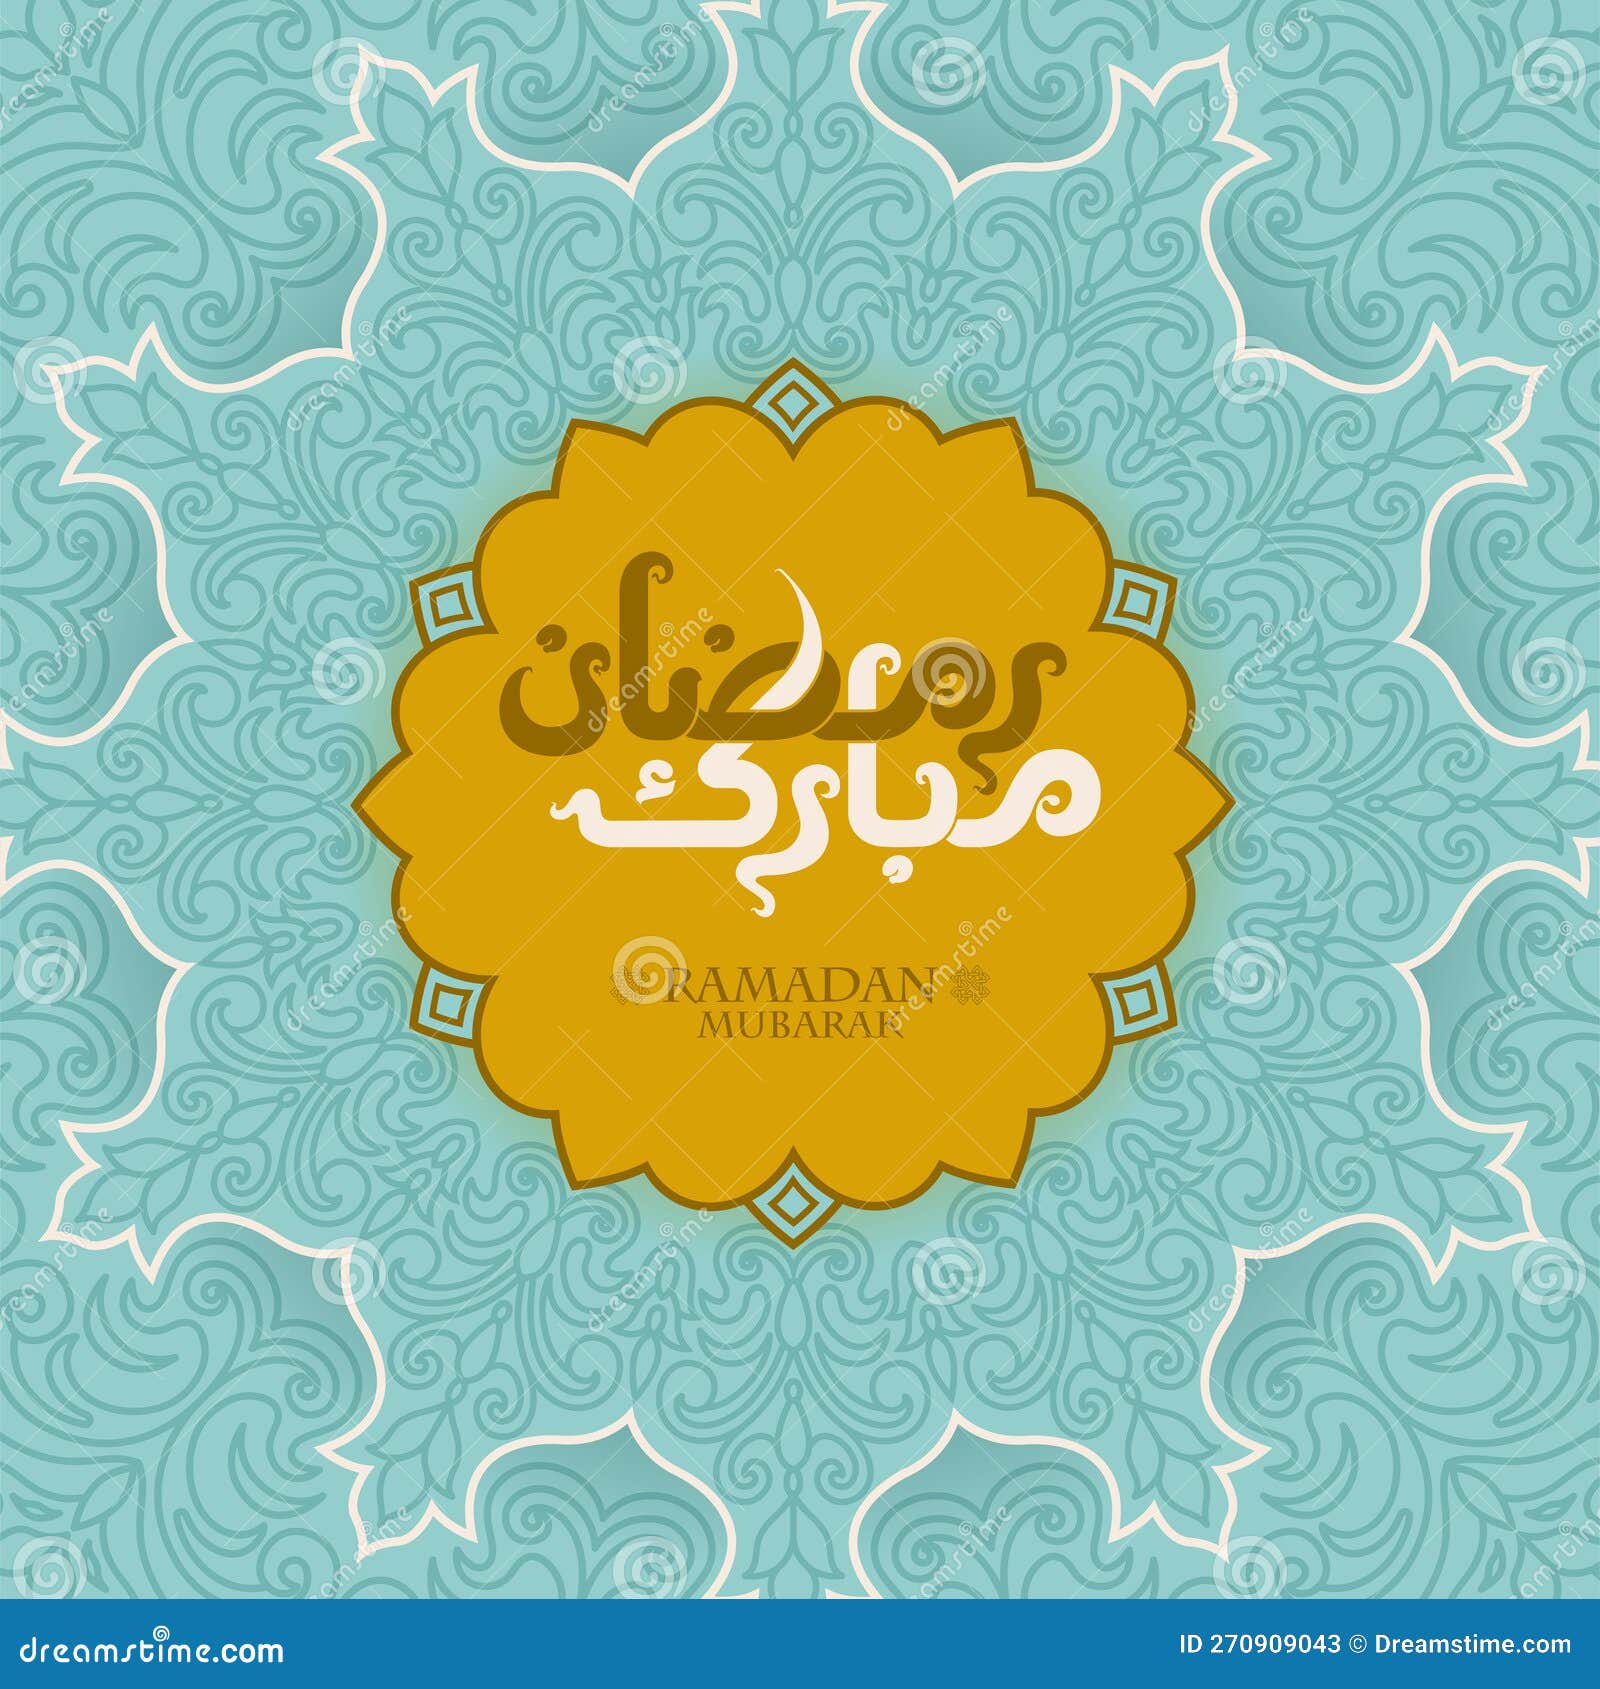 Flat Ramadan Mubarak Greeting Cards with Modern Arabic Calligraphy ...